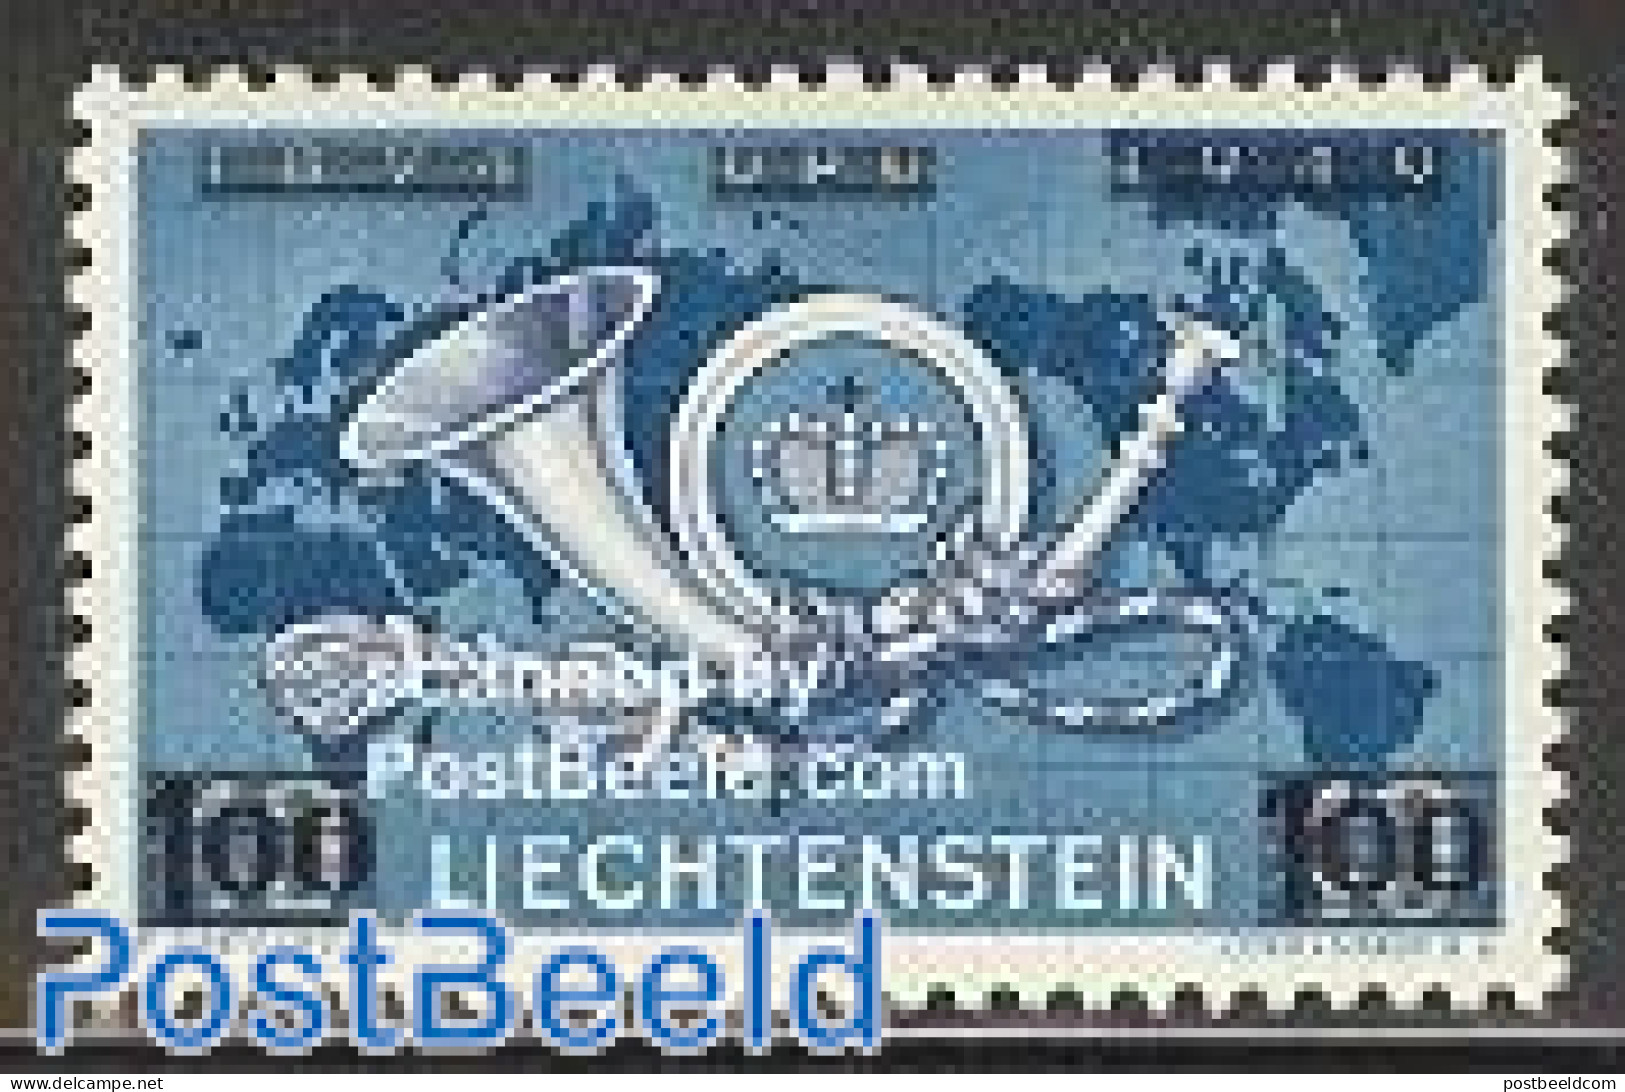 Liechtenstein 1950 UPU Overprint 1v, Mint NH, Various - U.P.U. - Maps - Nuevos